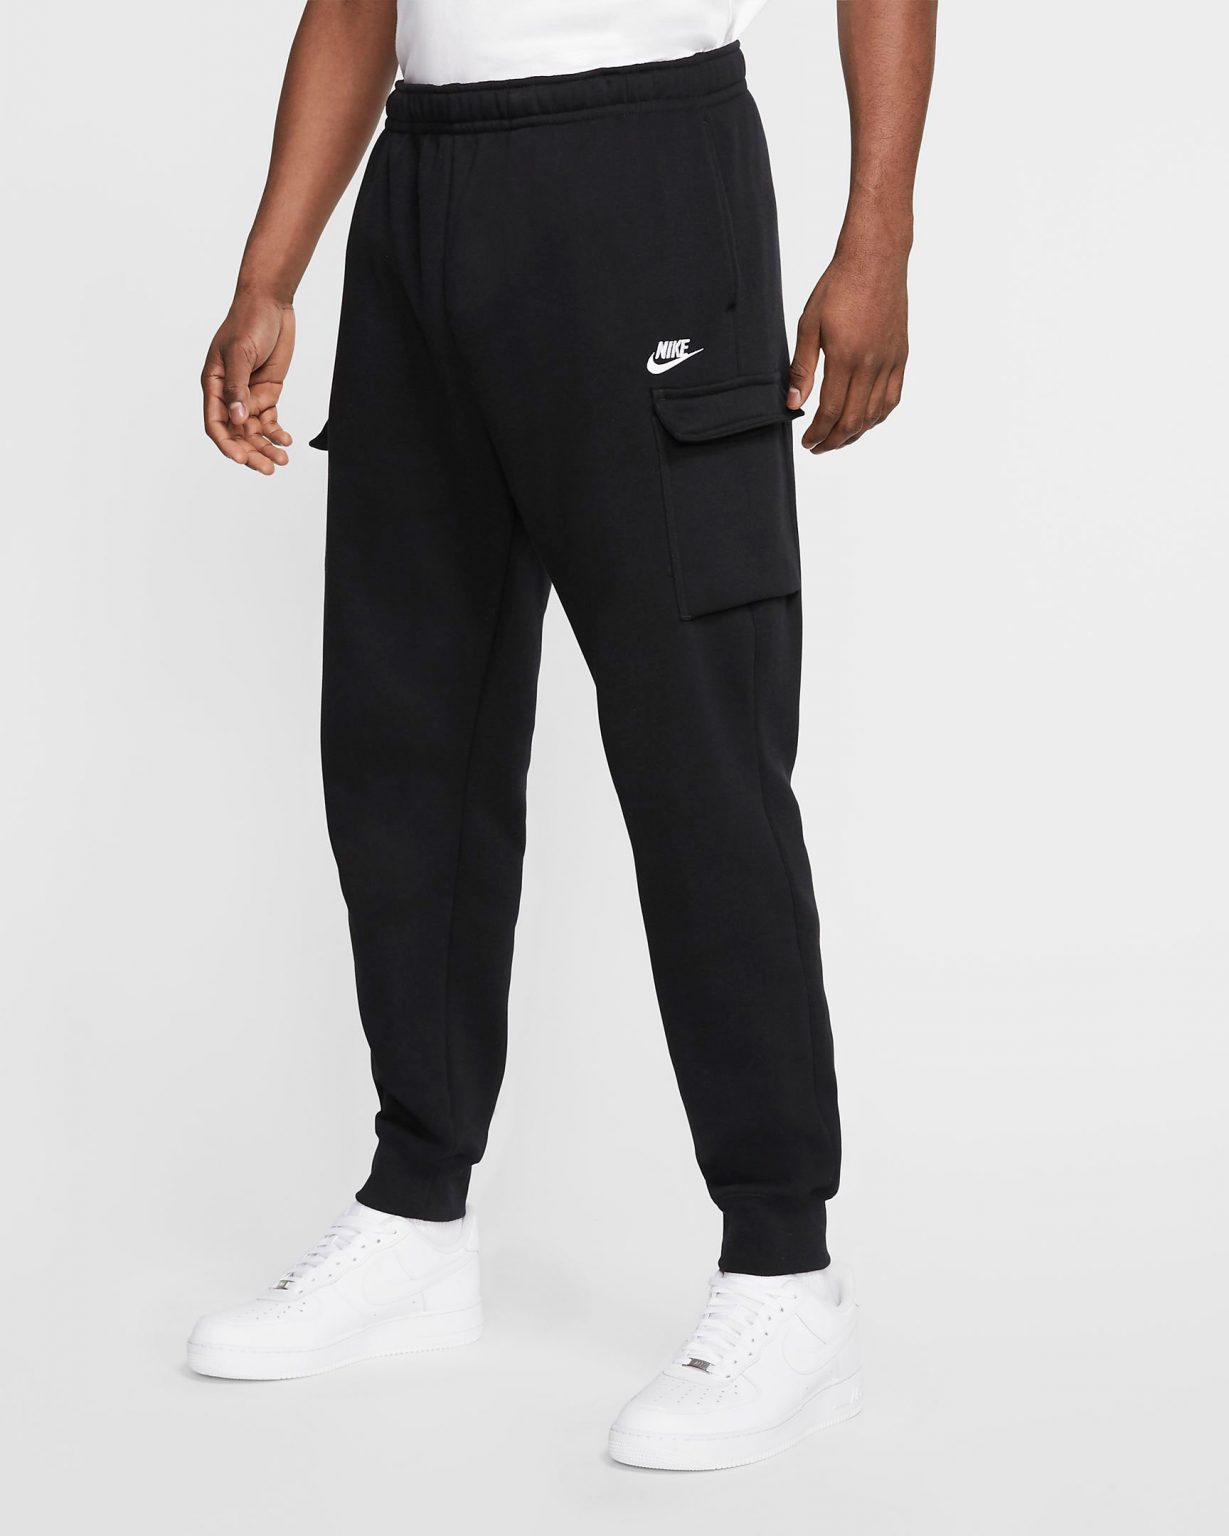 Nike VaporMax 2020 Oreo Sneaker Outfits | SneakerFits.com